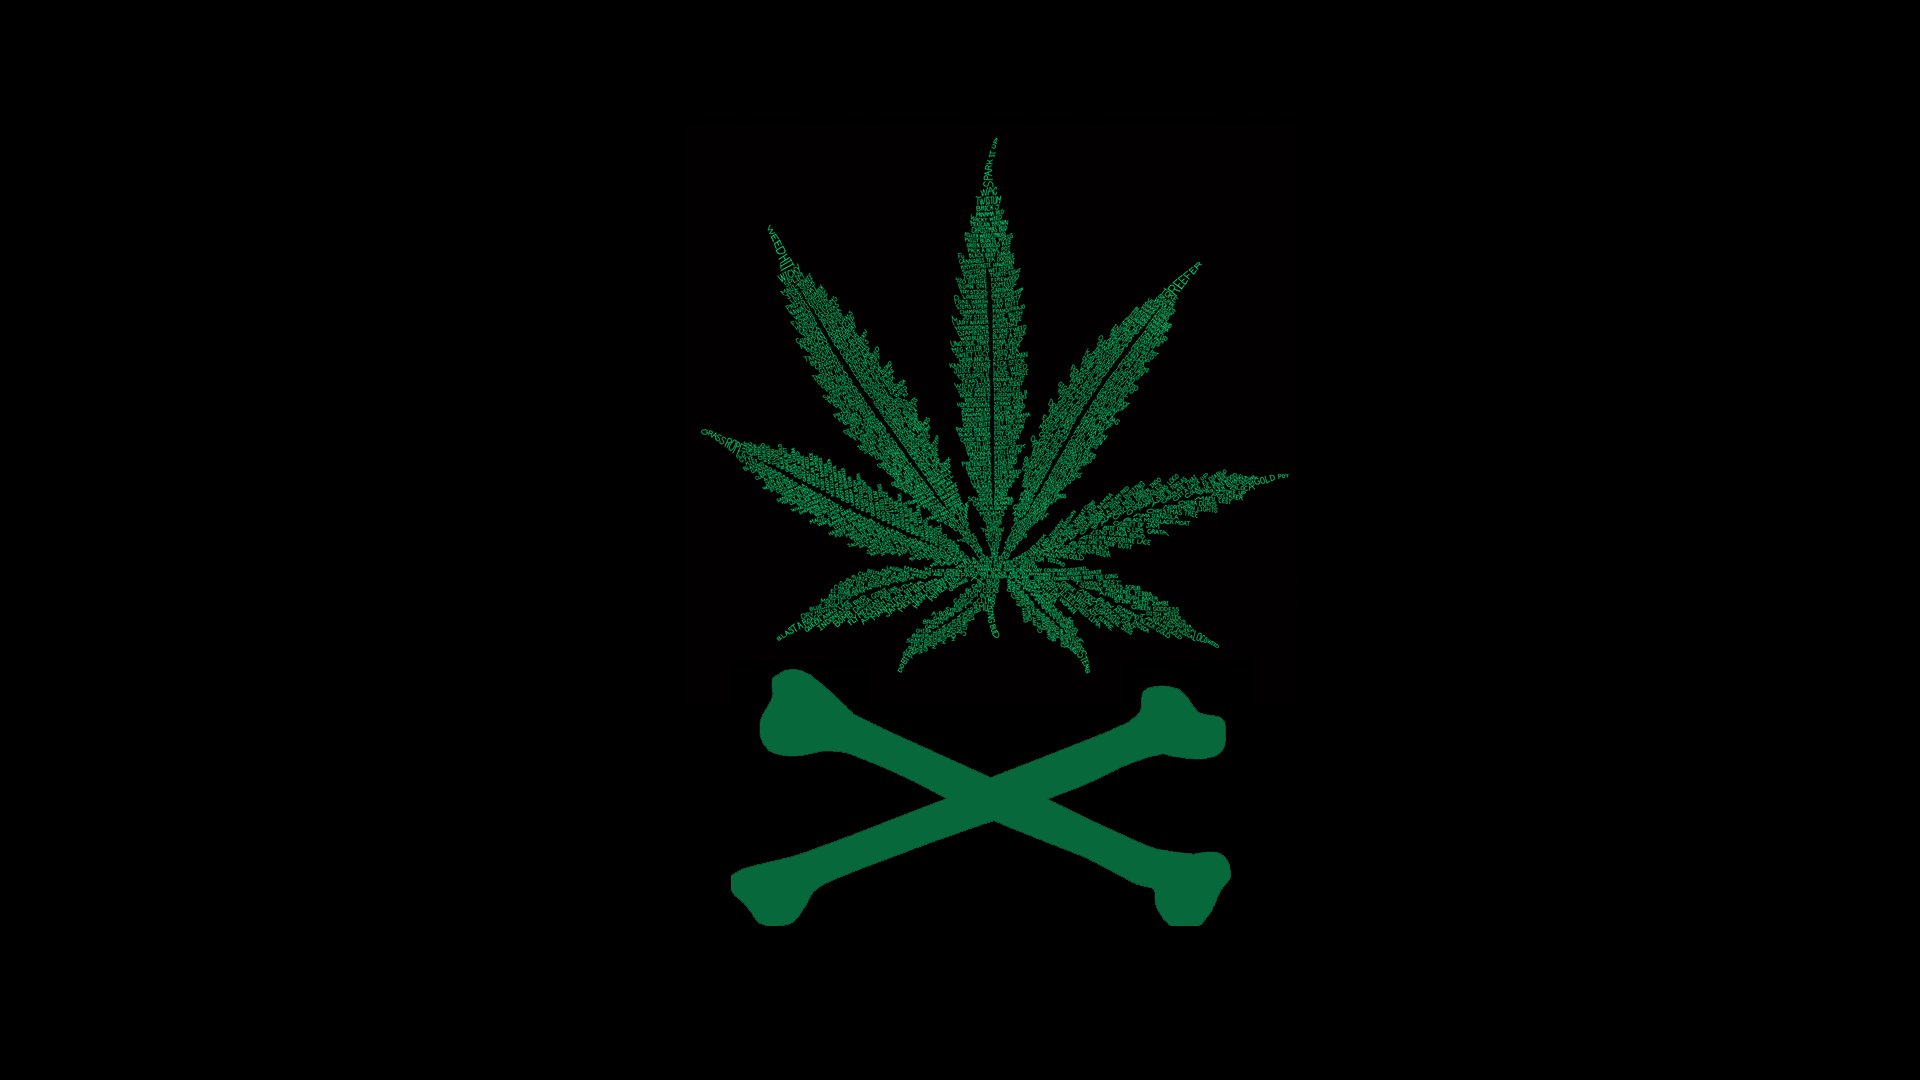 Marijuana Hd Wallpapers